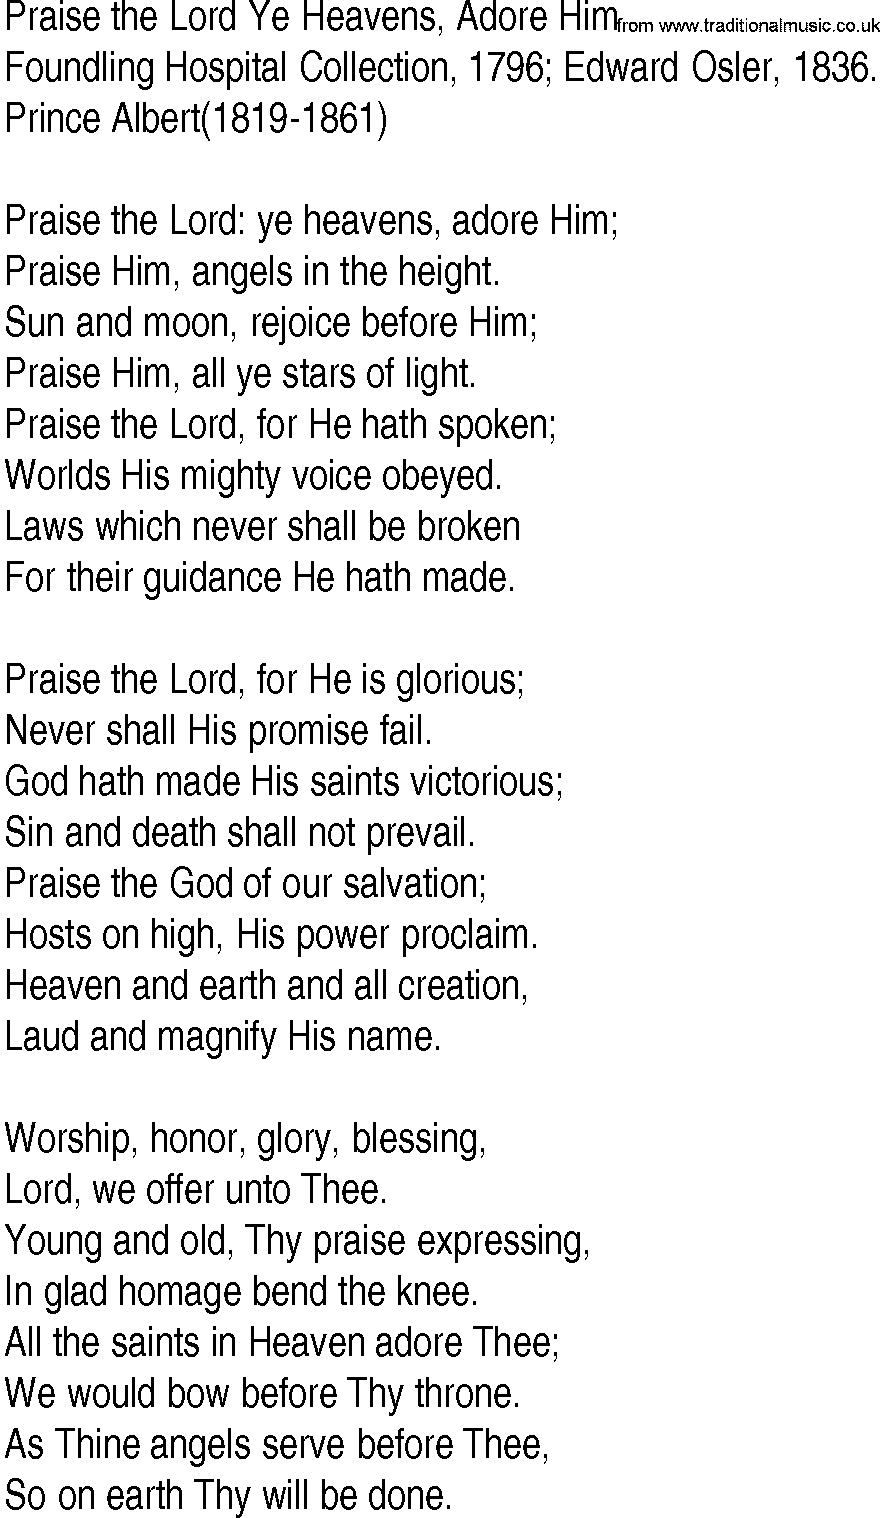 Hymn and Gospel Song: Praise the Lord Ye Heavens, Adore Him by Edward Osler lyrics